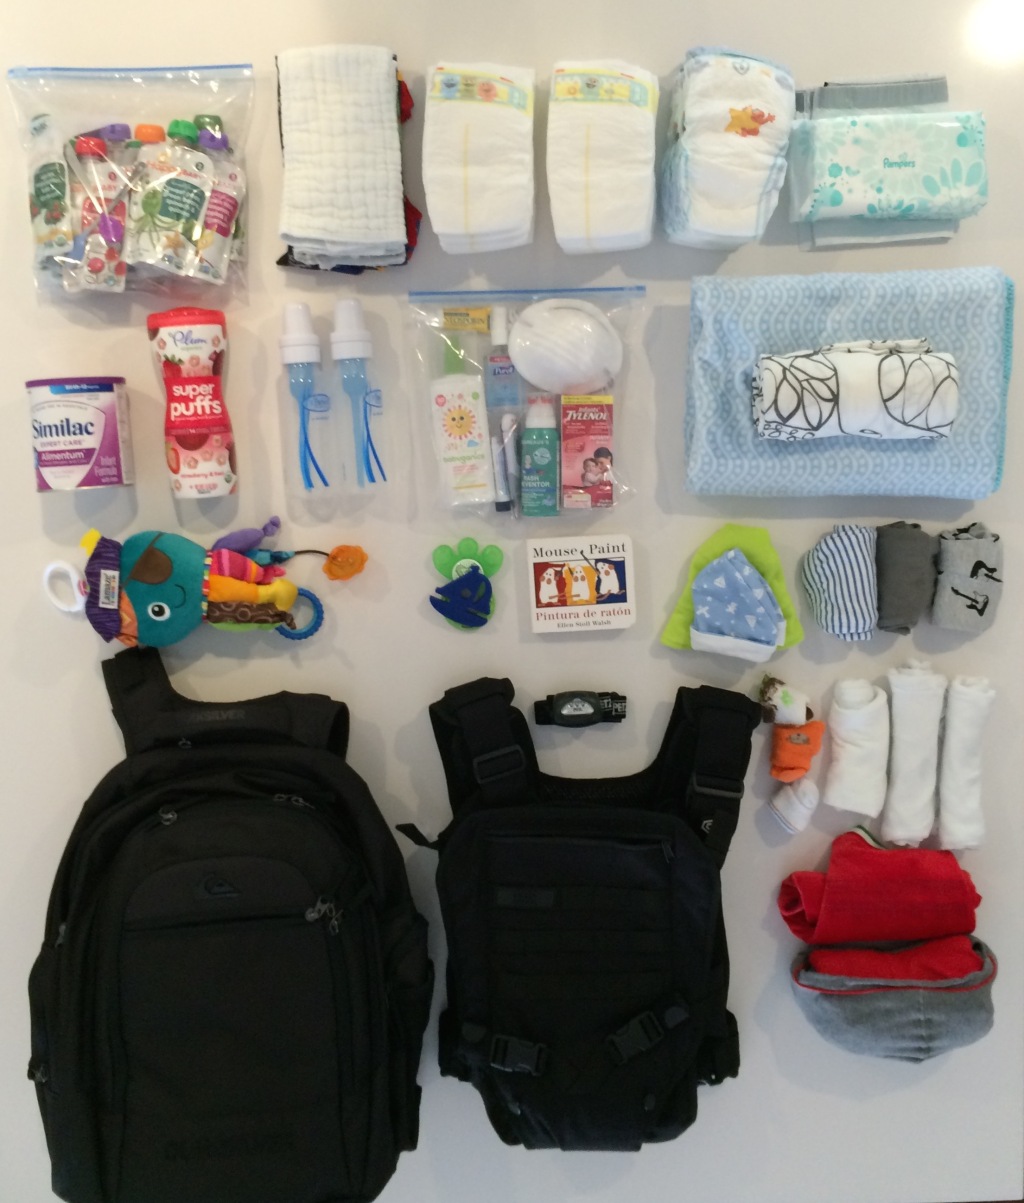 Earthquake Survival Kit for Babies